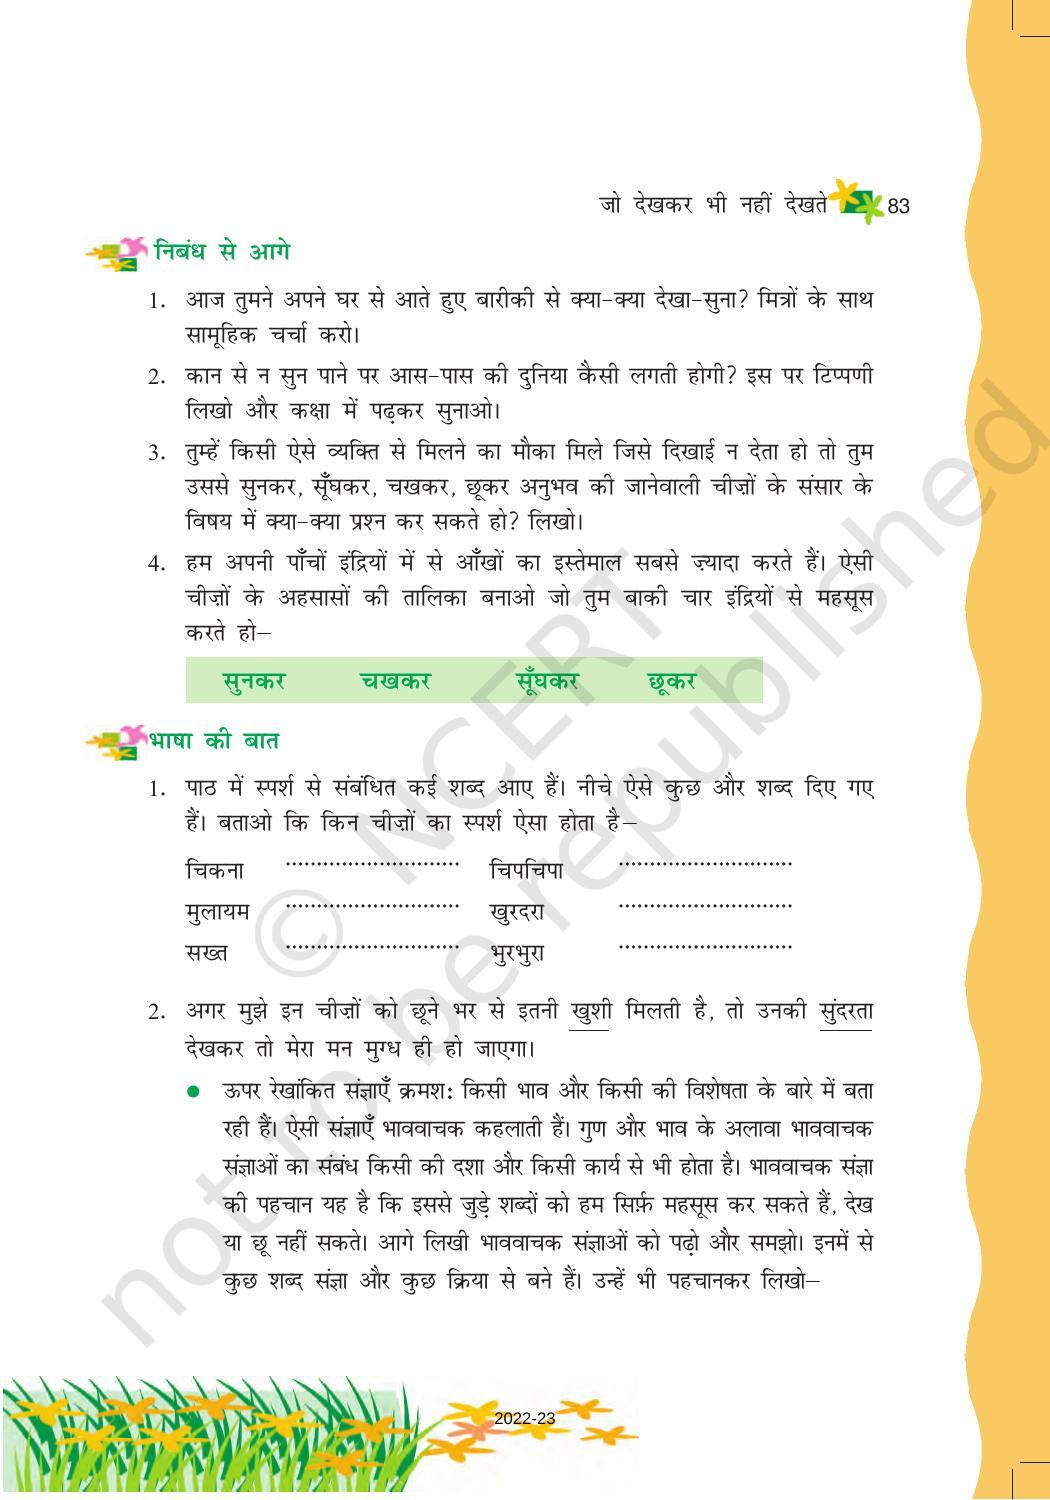 NCERT Book for Class 6 Hindi(Vasant Bhag 1) : Chapter 11-जो देखकर भी नहीं देखते - Page 4